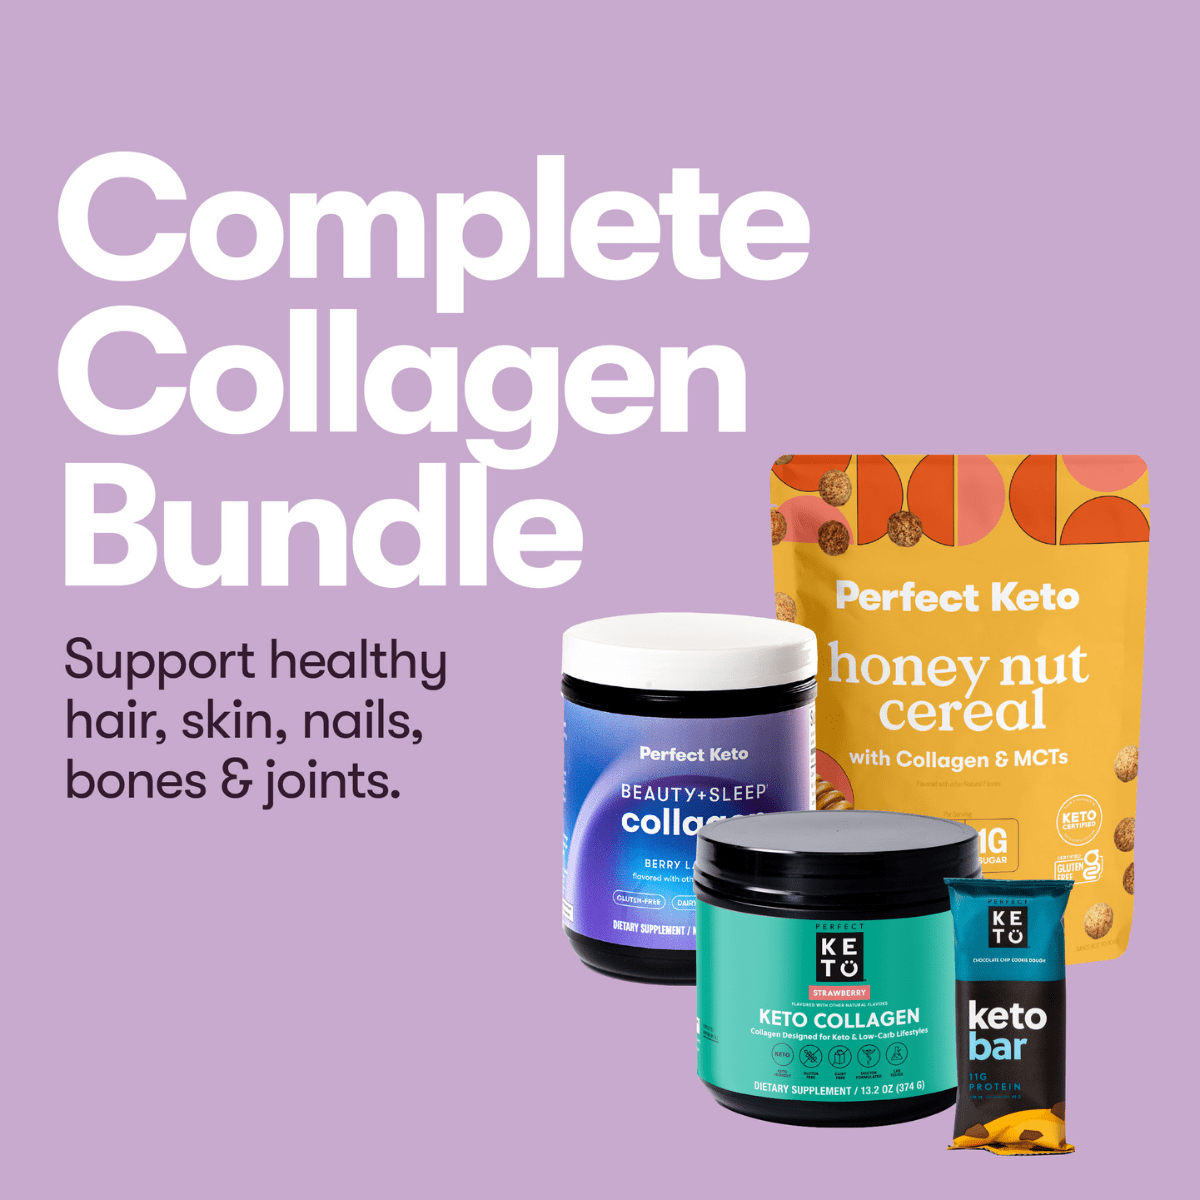 Complete Collagen Bundle